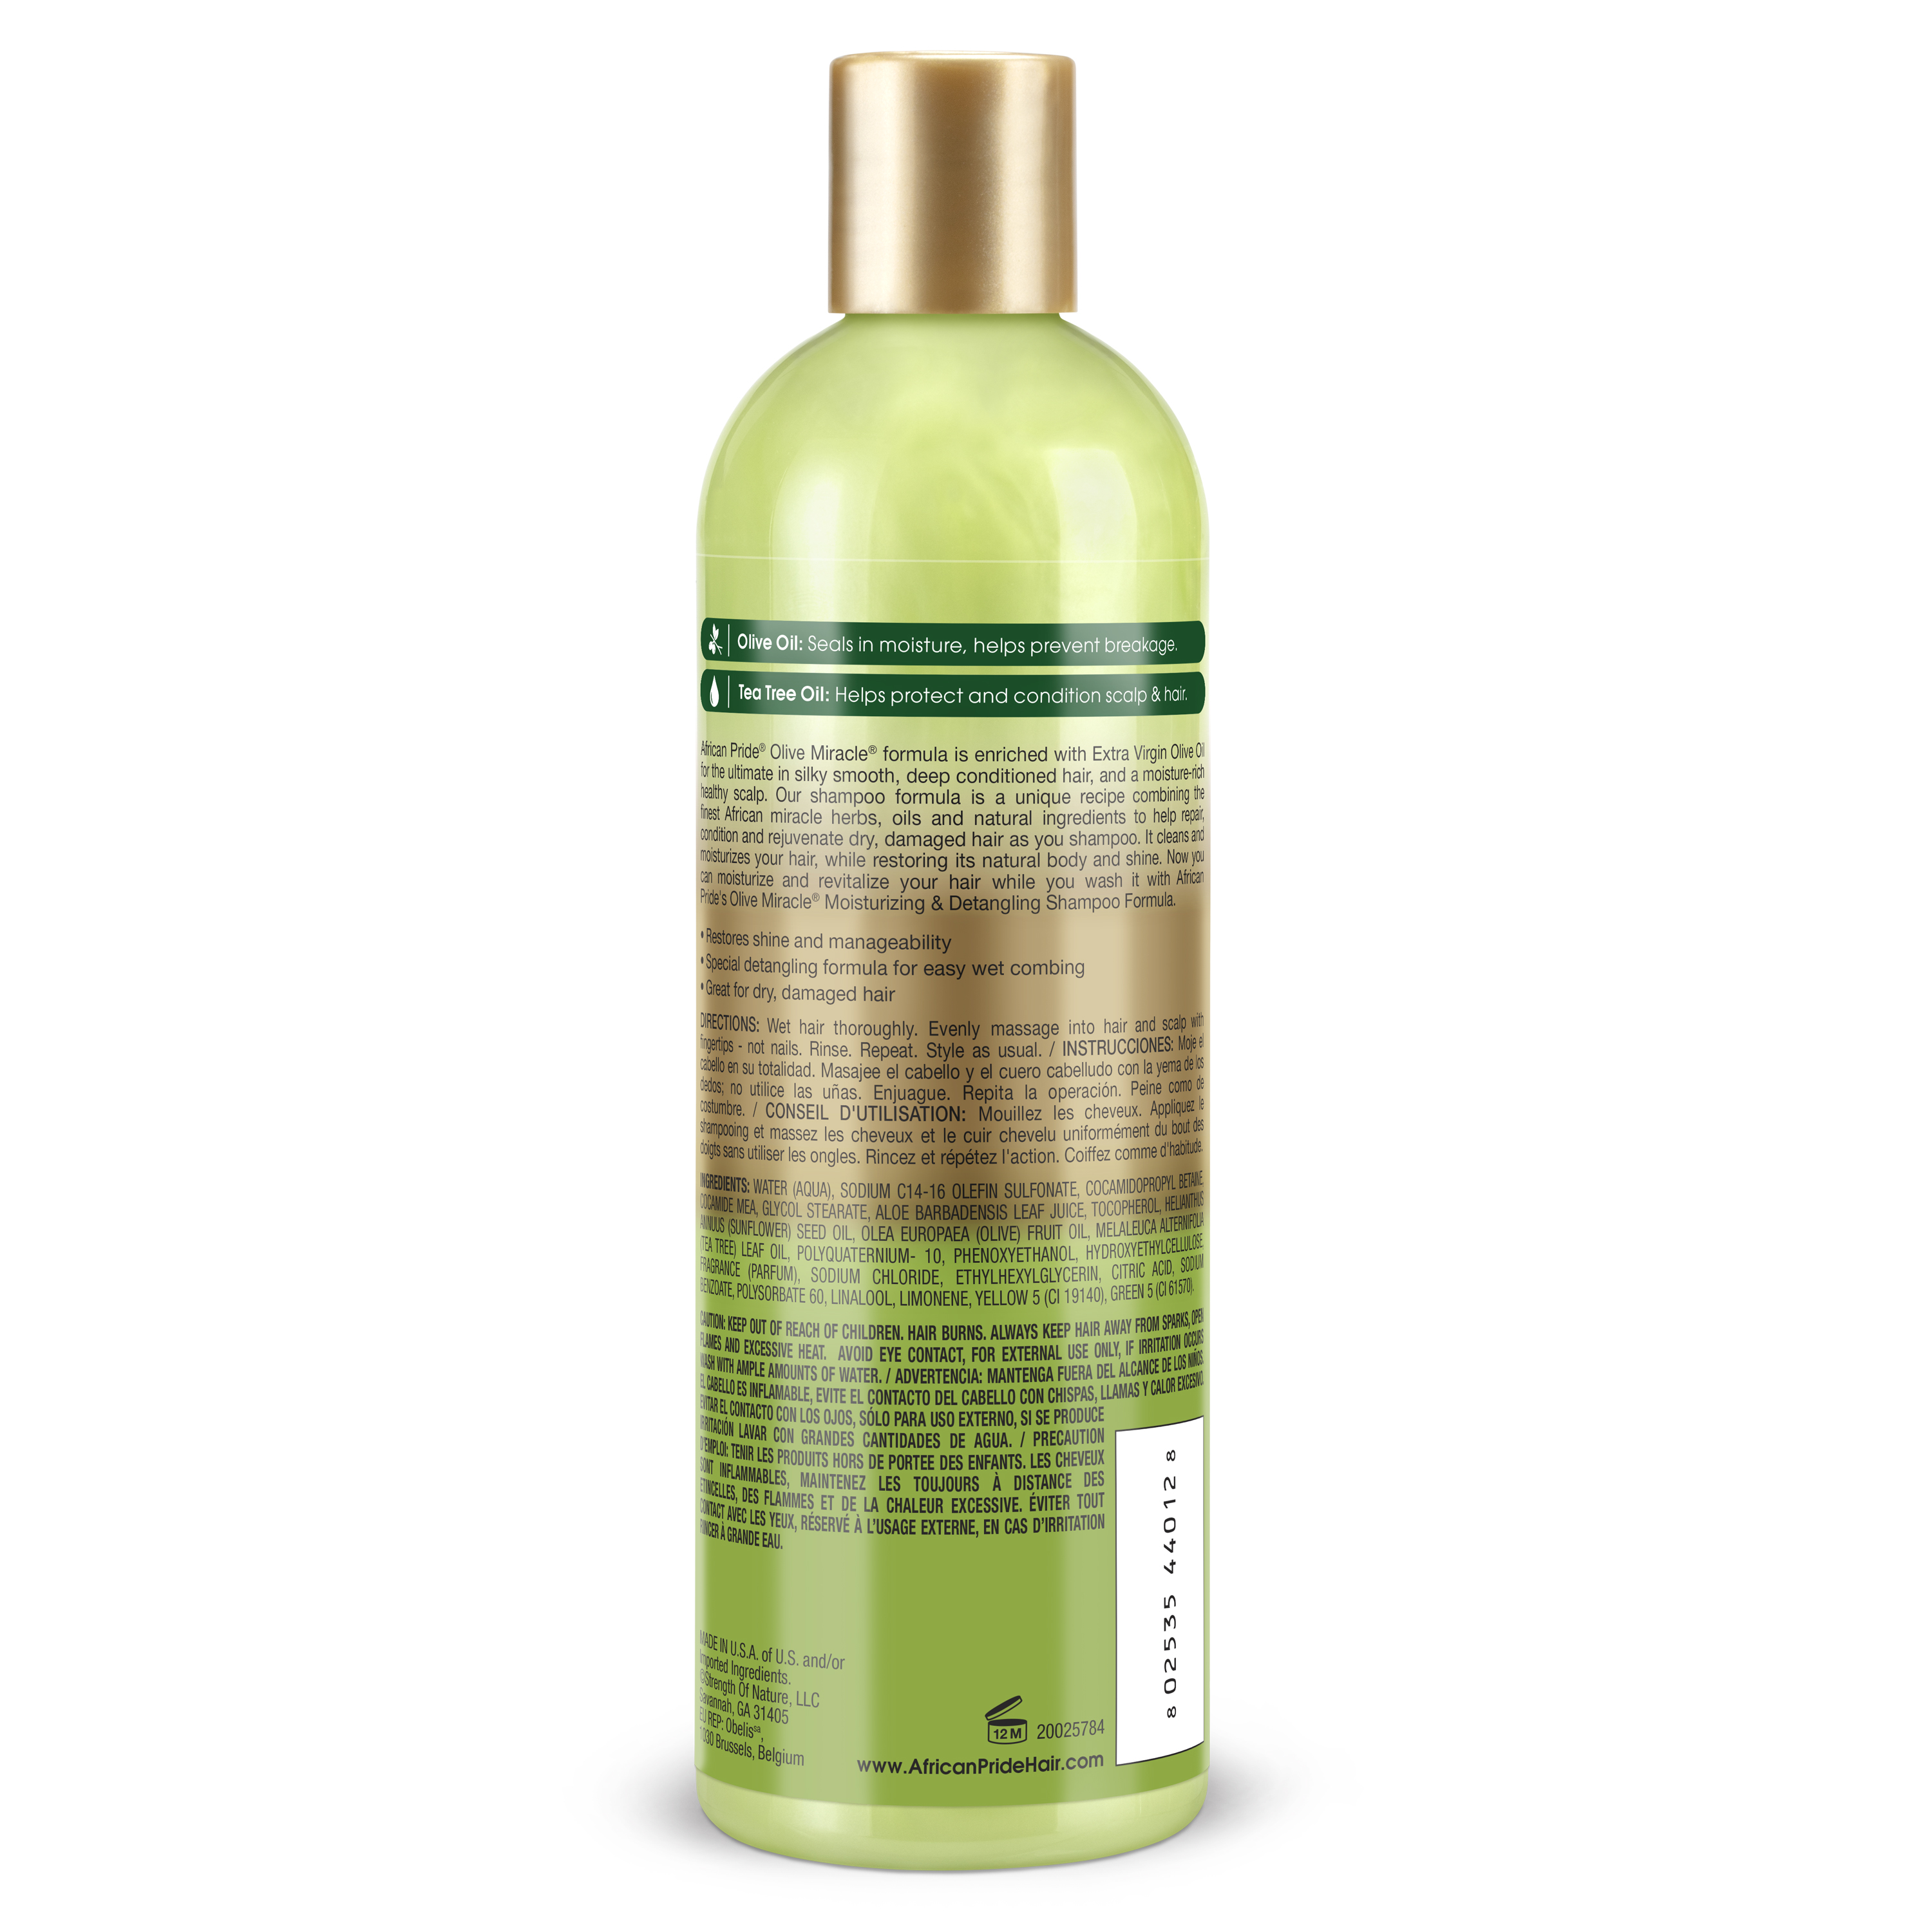 African Pride Olive Miracle Detangling Moisturizing Anti-Breakage Formula 2-in-1 Shampoo Plus Conditioner, 12 fl oz - image 2 of 7